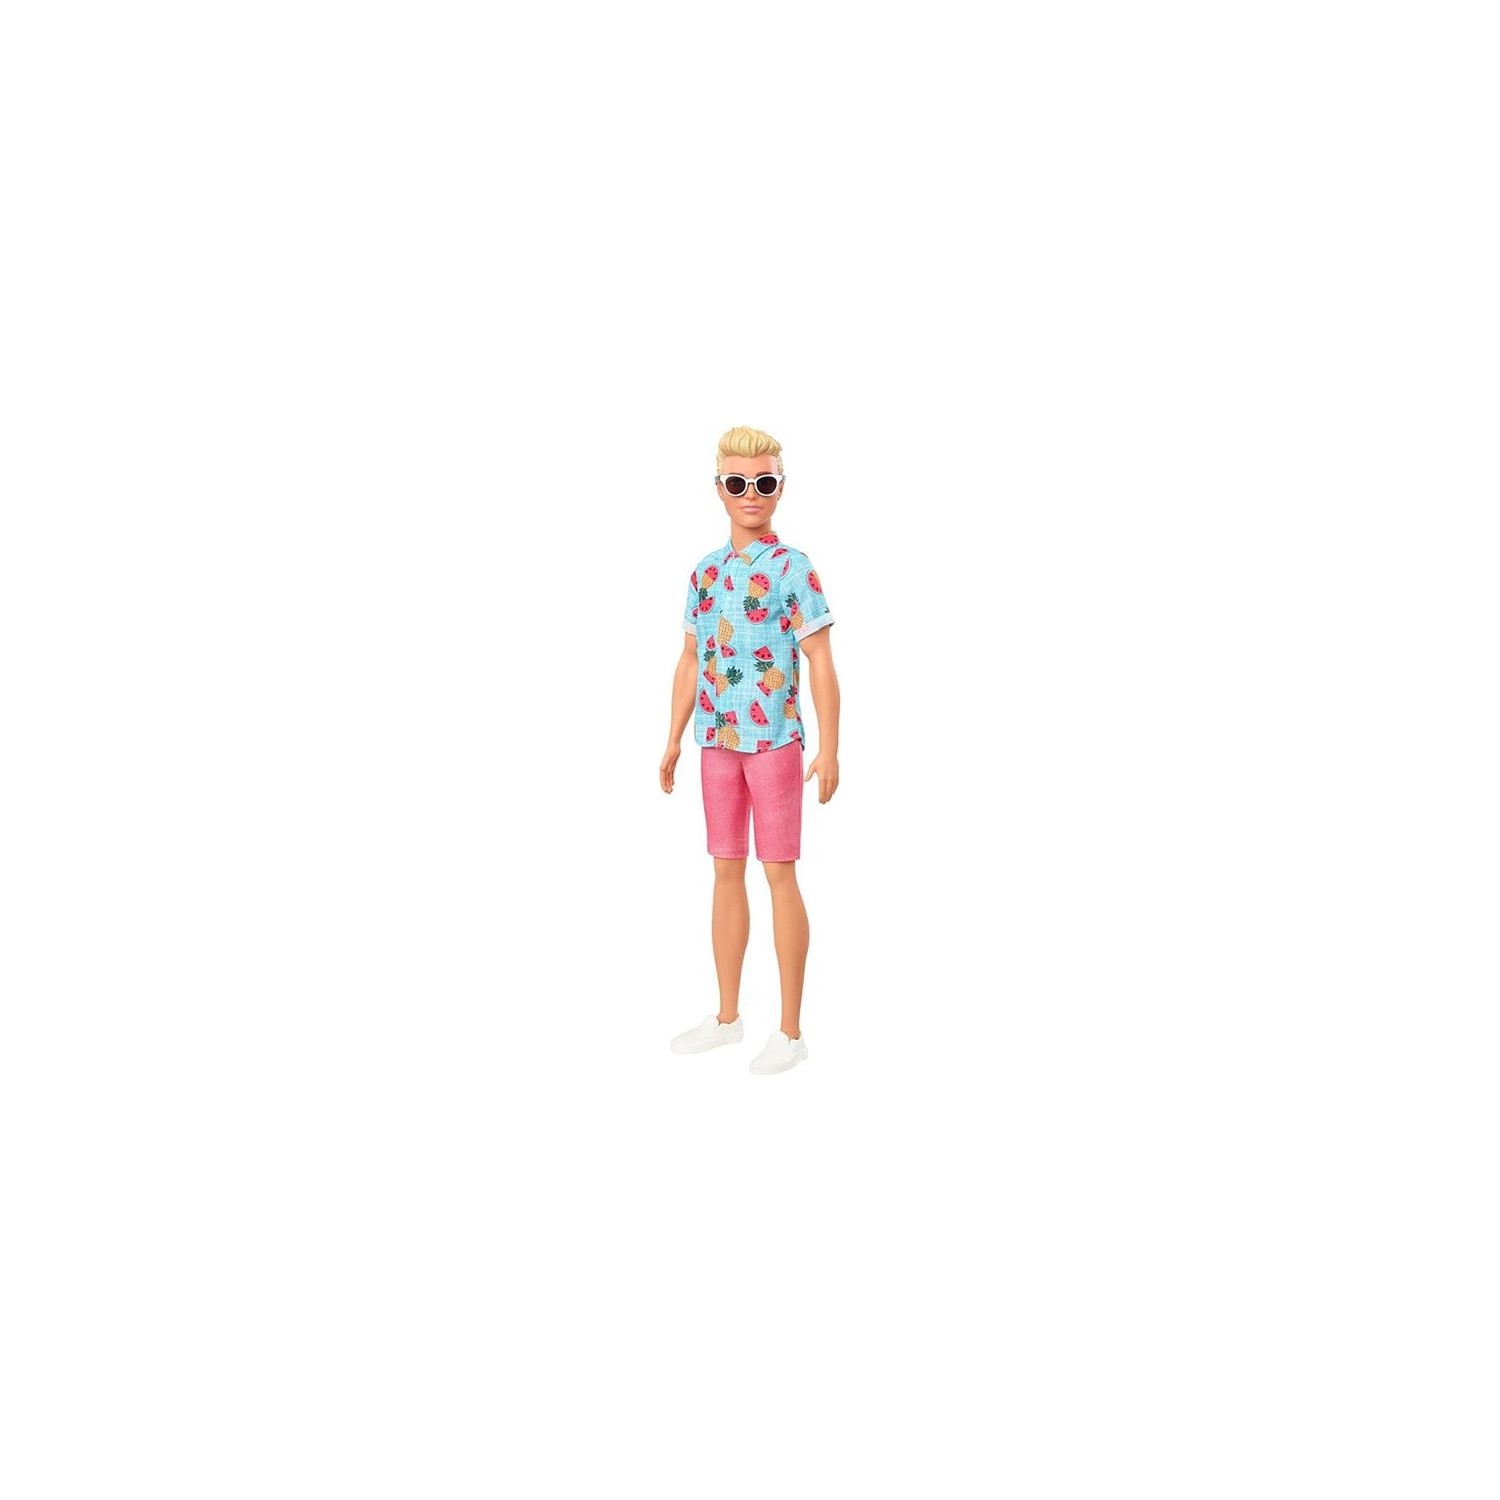 Кукла Barbie Кен DWK44-GHW68 набор кукол монстер хай дьюс горгон и гил веббер mattel